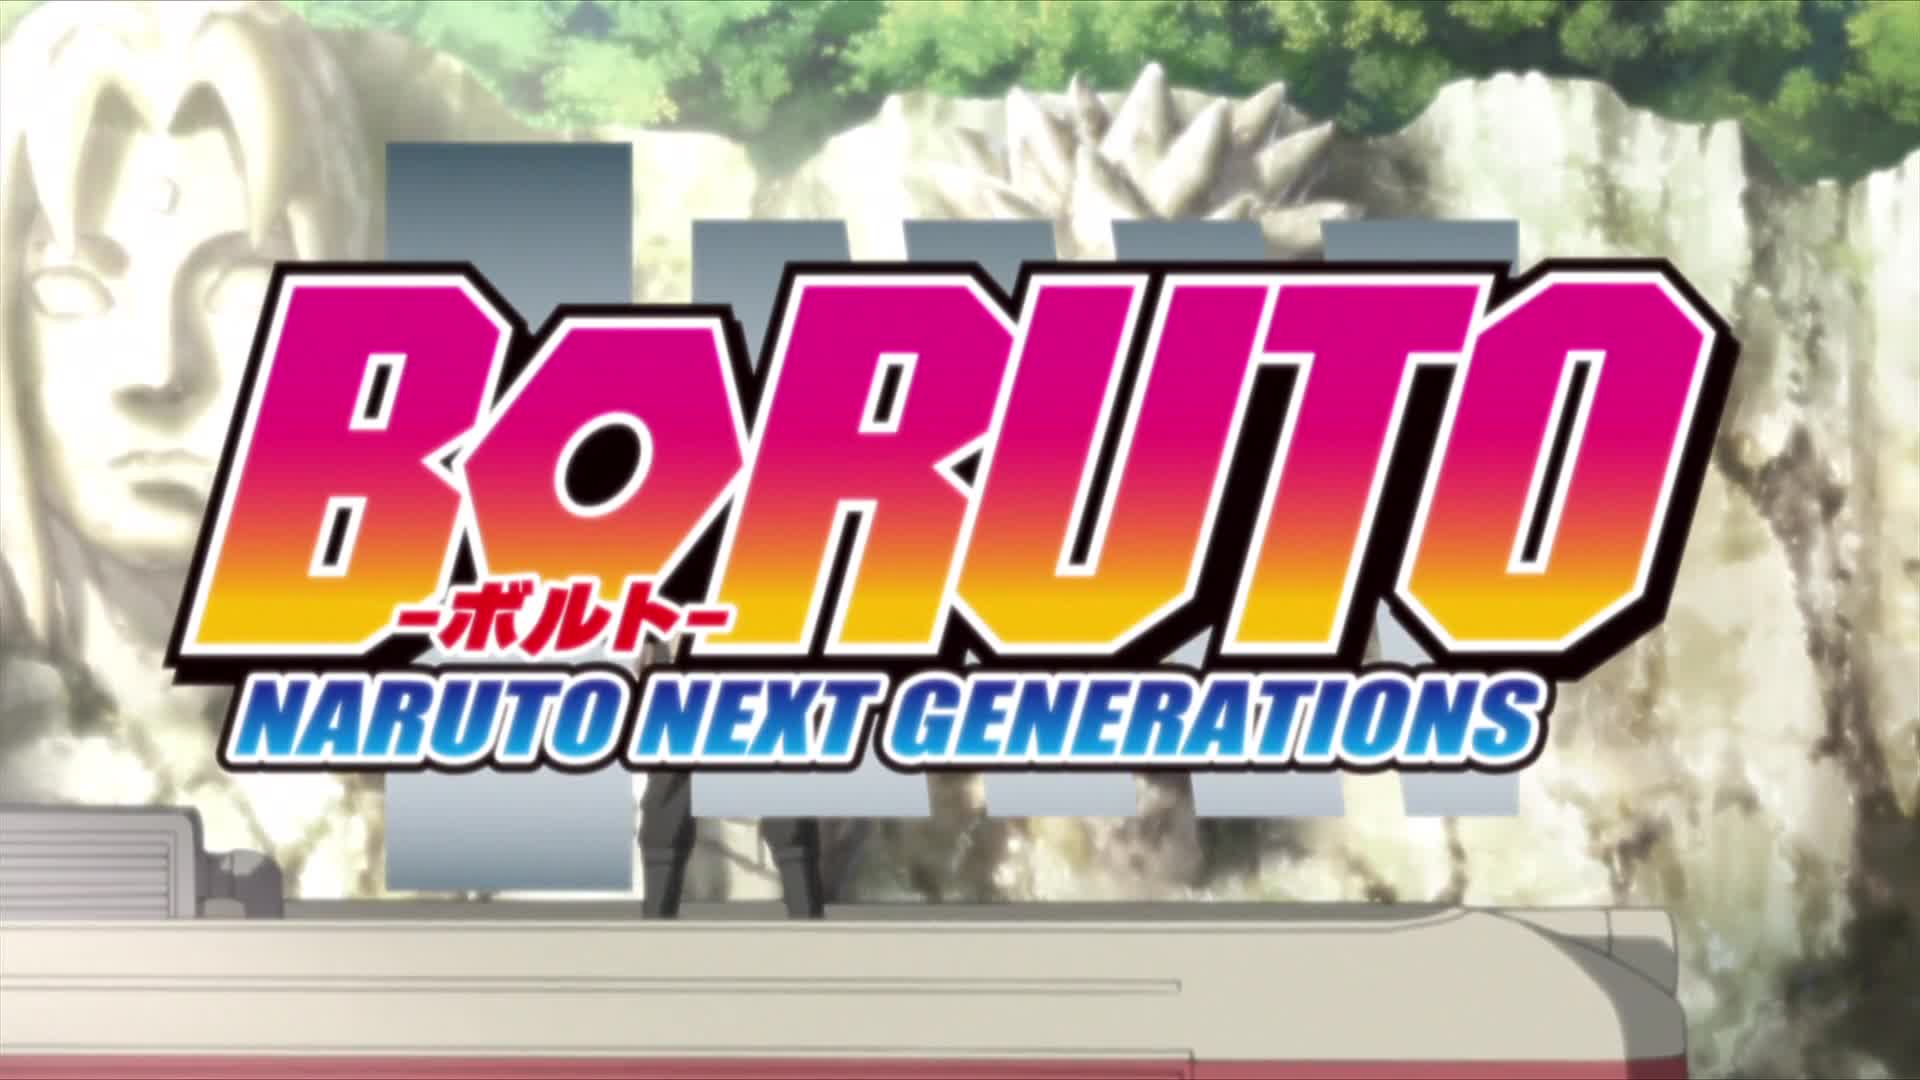 Boruto: Naruto Next Generations (Dub)